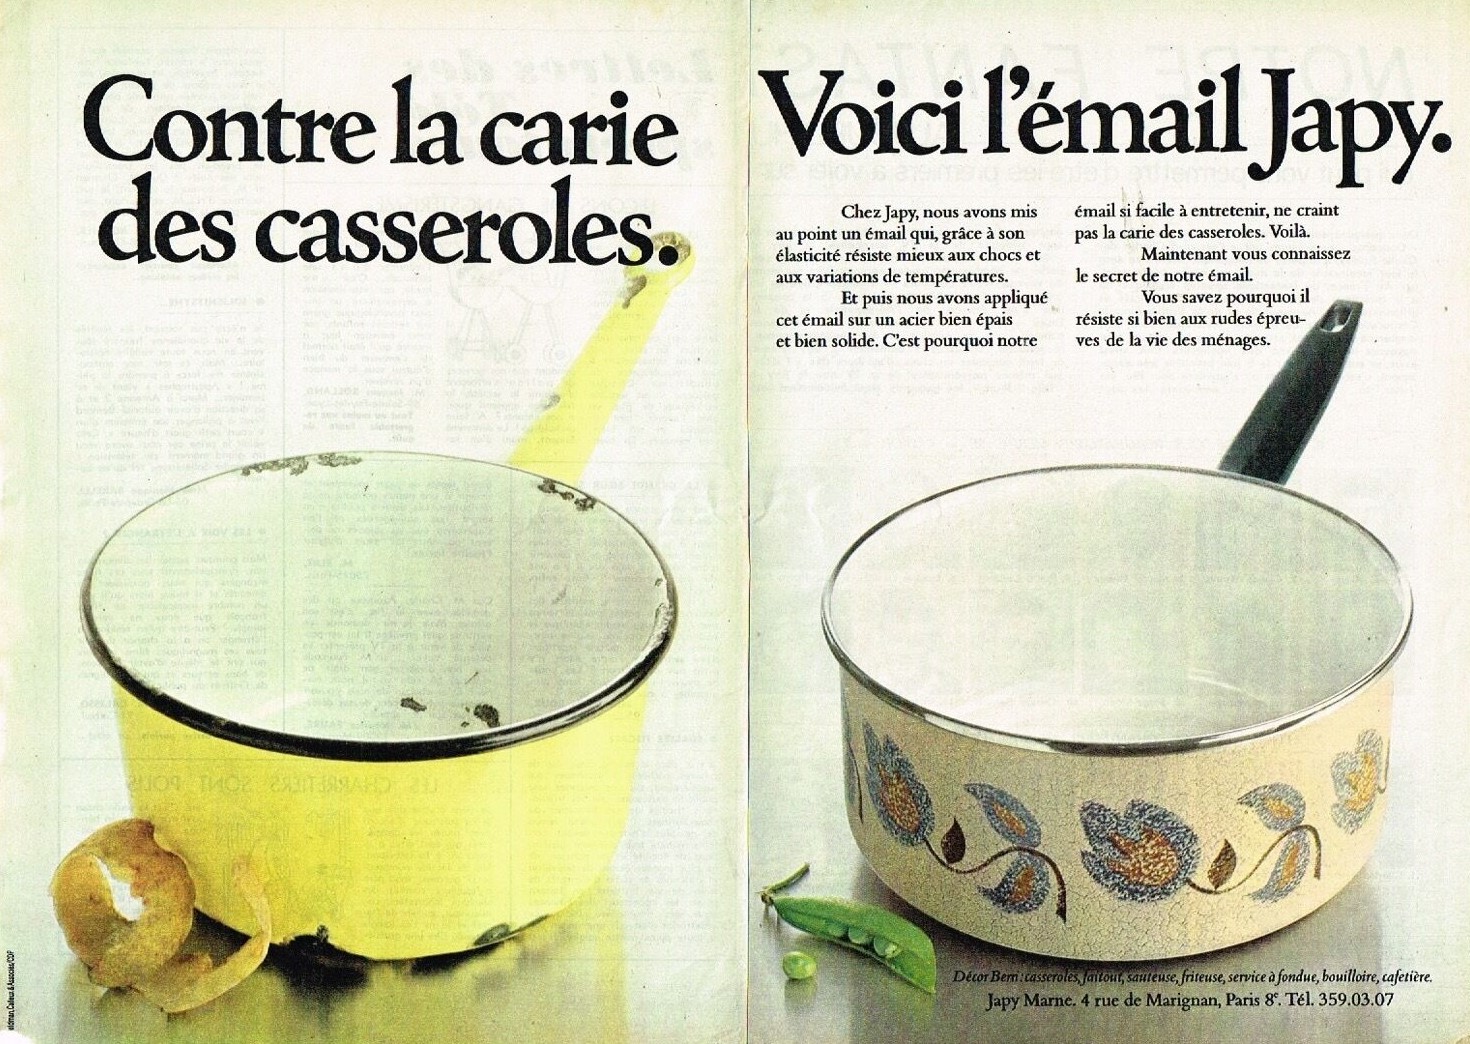 1975 Les casseroles email Japy